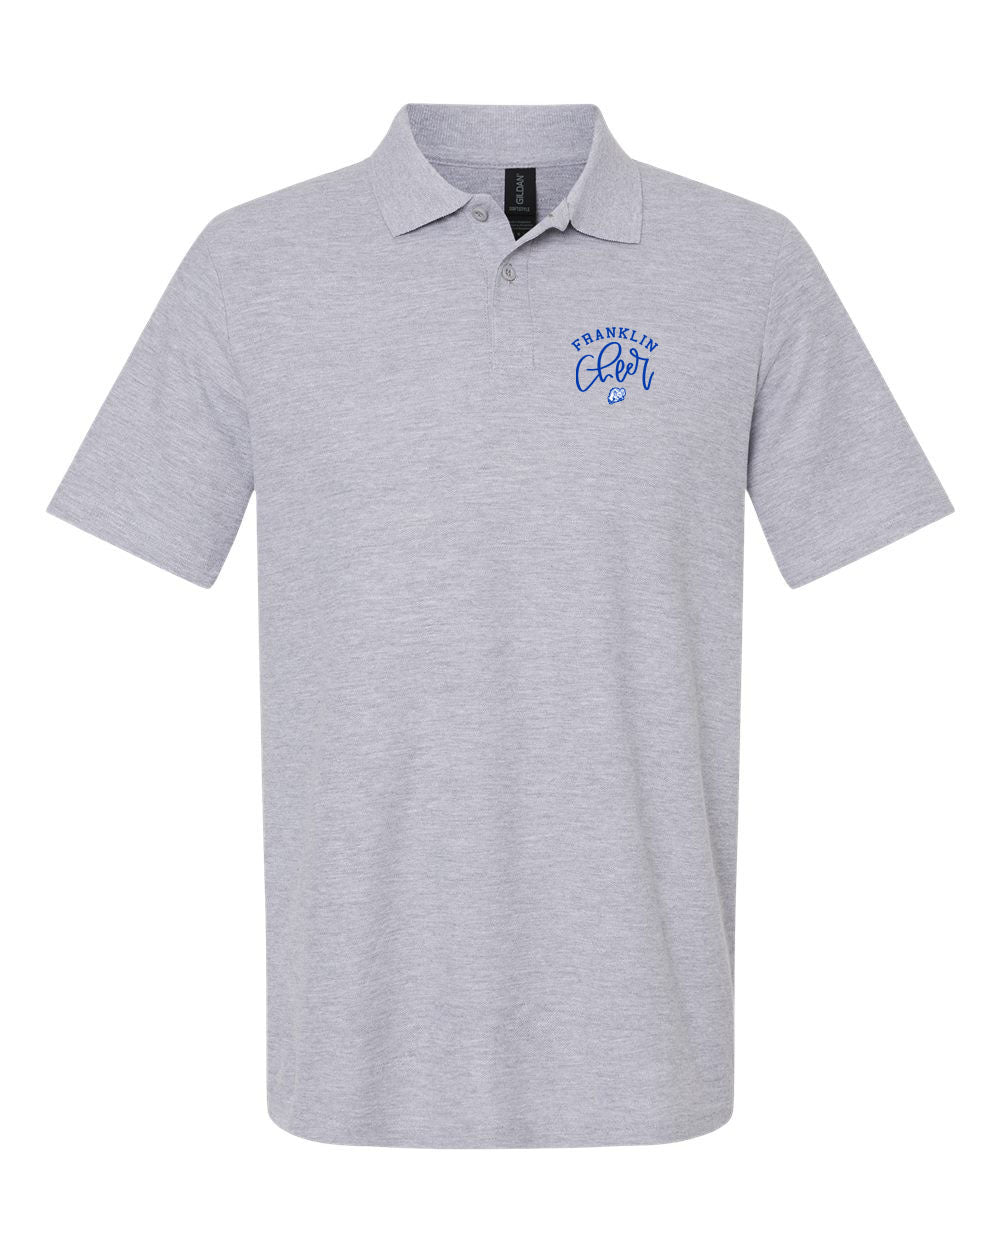 Franklin Cheer Polo T-Shirt Design 3